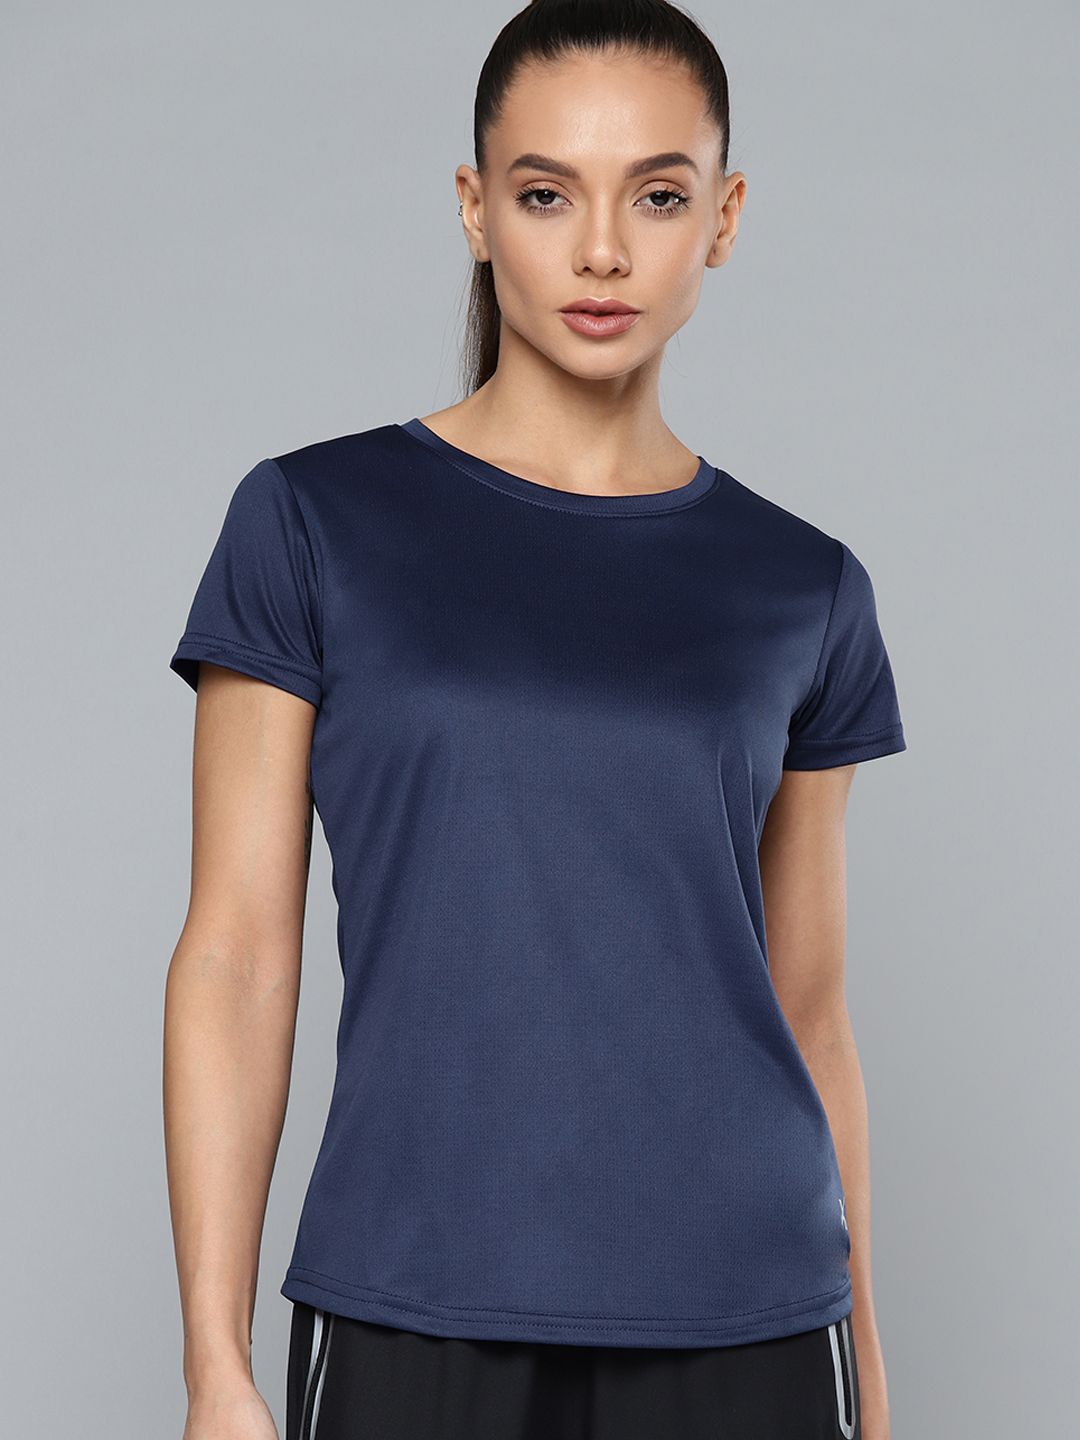 HRX by Hrithik Roshan Women Navy Blue Running T-shirt Price in India